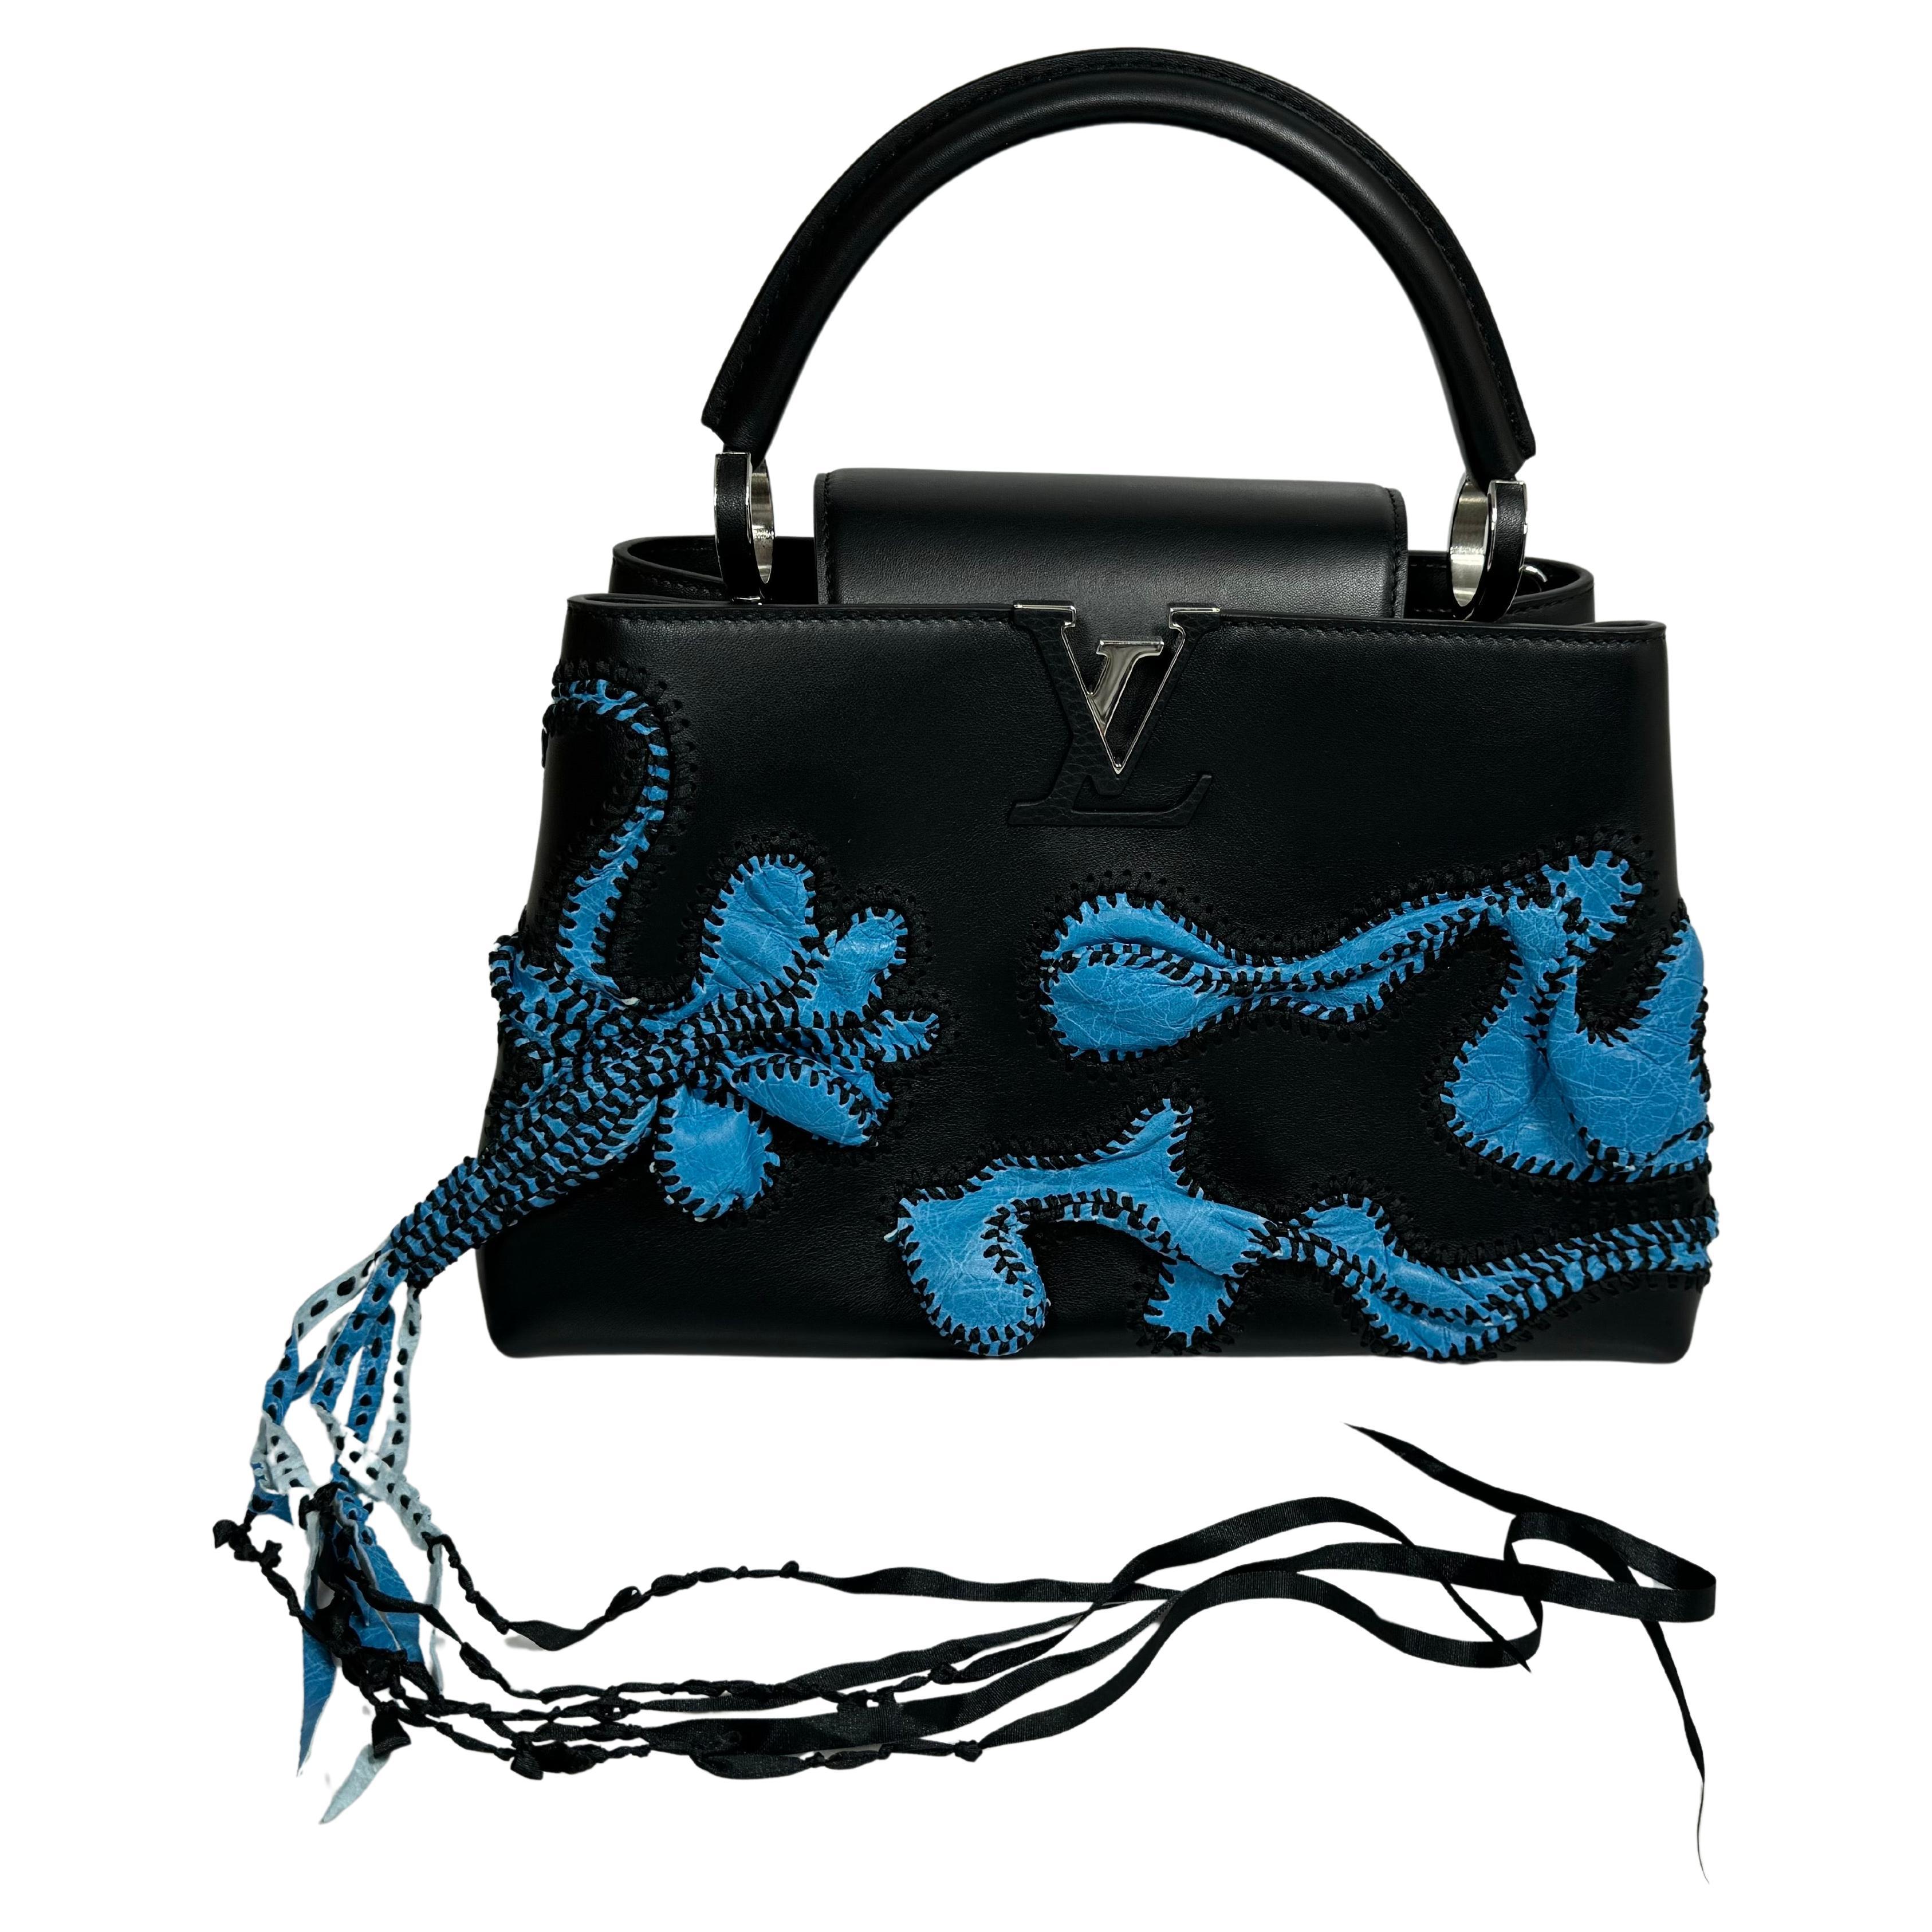 Louis Vuitton Limited Edition Nicholas Hlobo's Artycapucines Handtasche-NEW IN BOX im Angebot